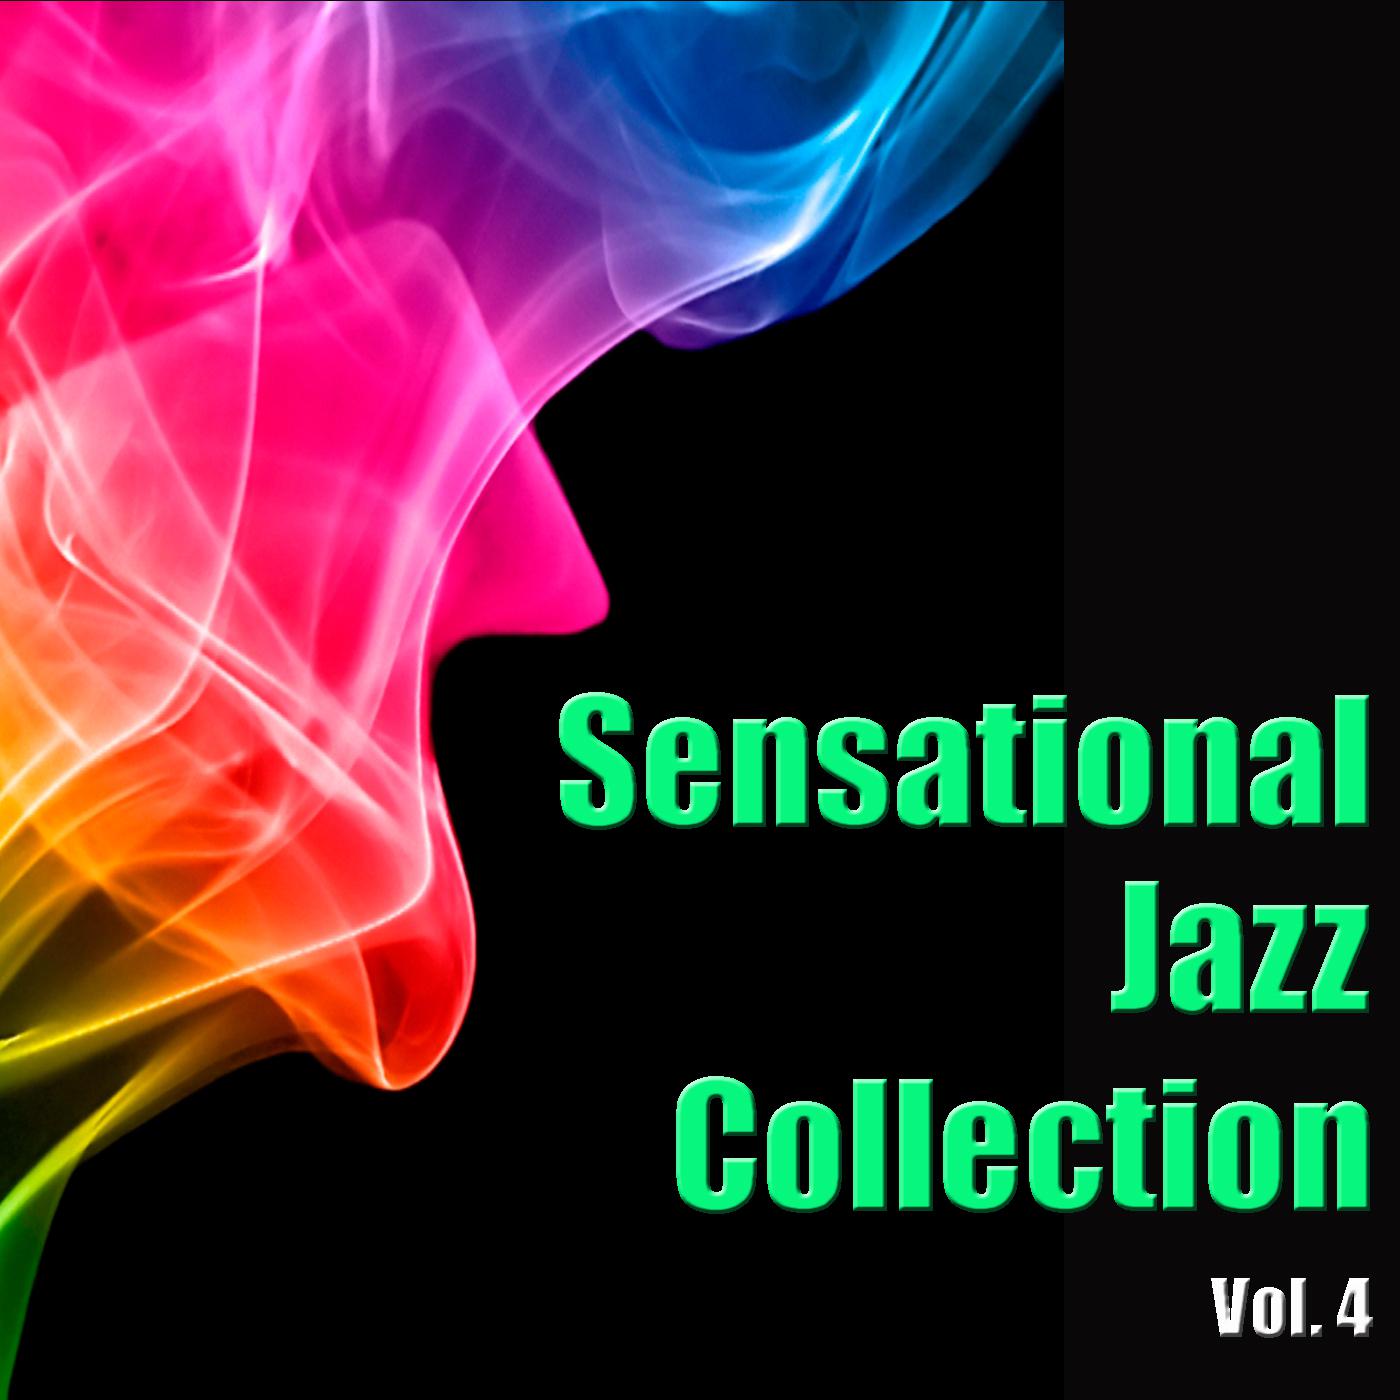 Sensational Jazz Collection Vol. 4